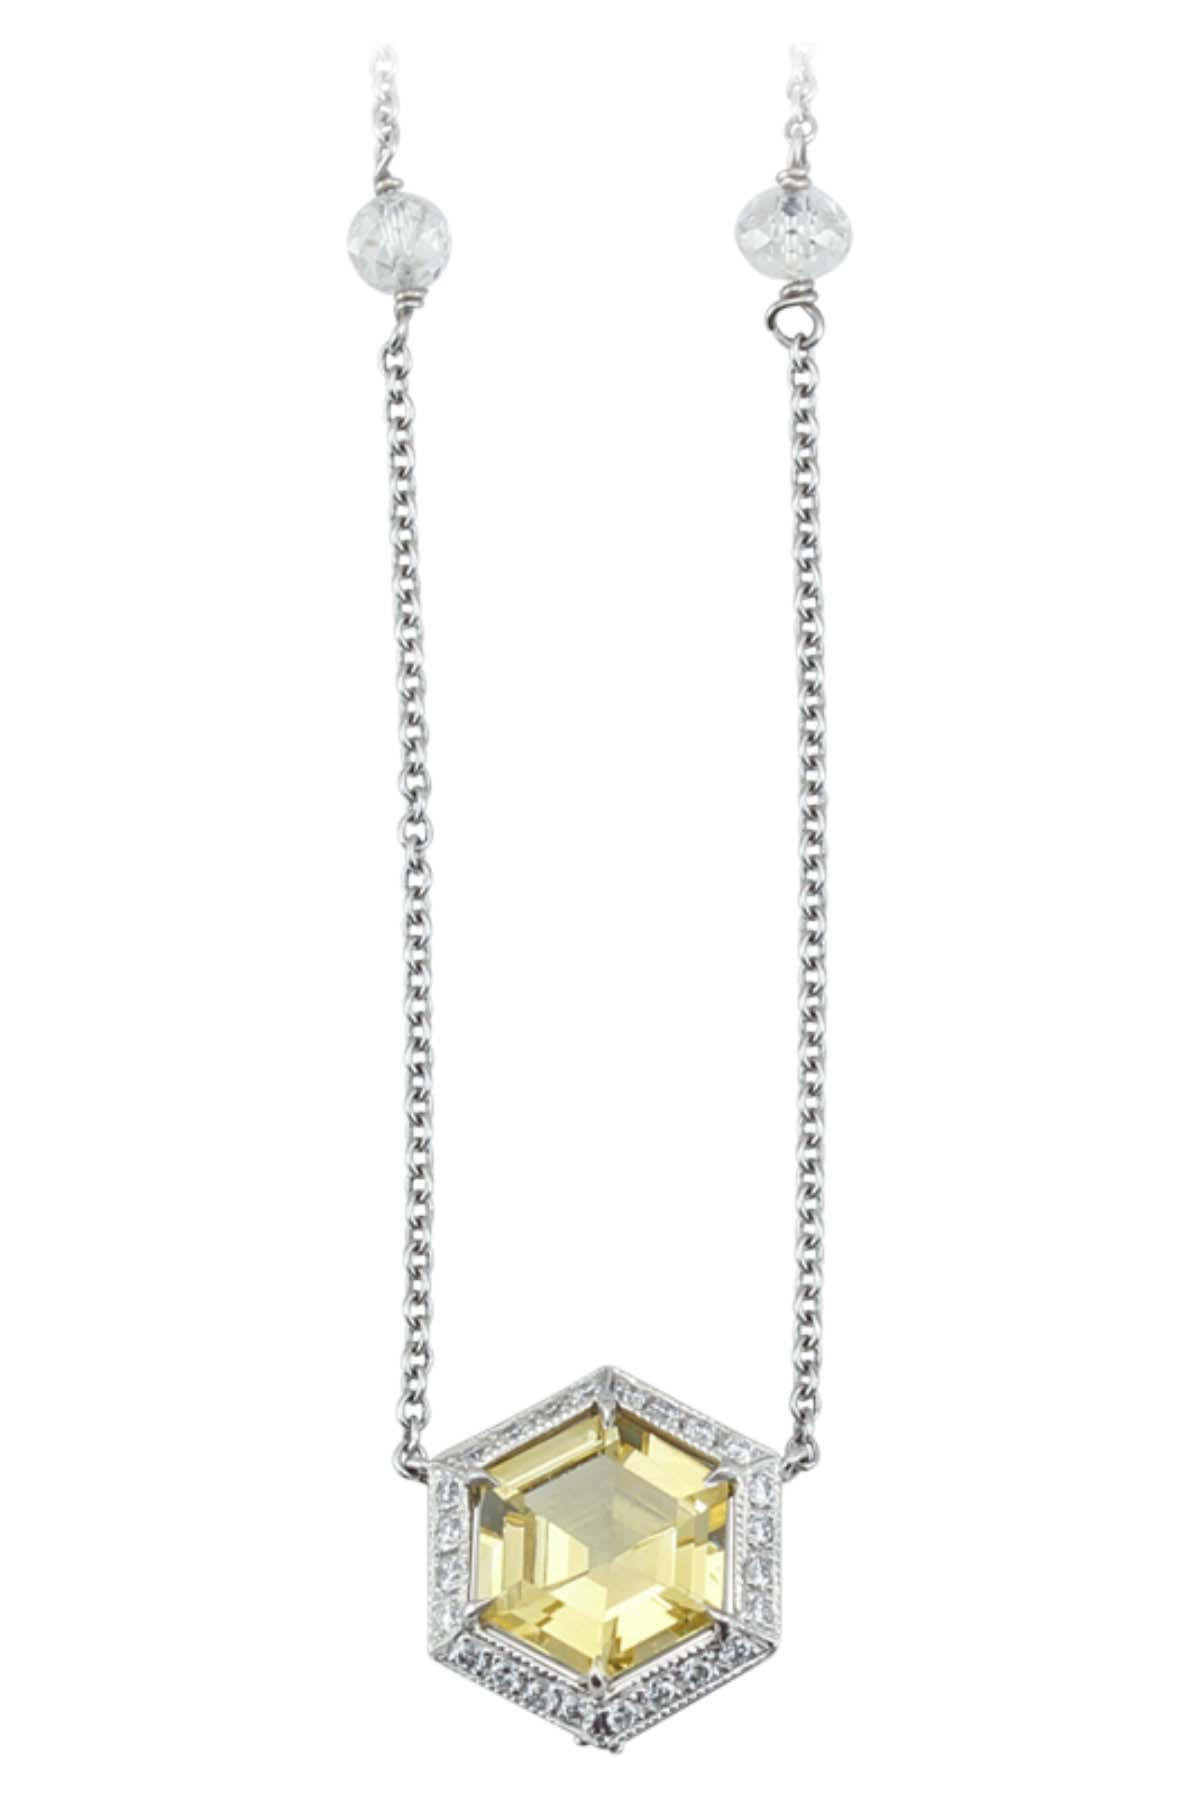 Fine Yellow Sapphire Jewelry | Fine Jewelry and Gems by Leon Mason Co.